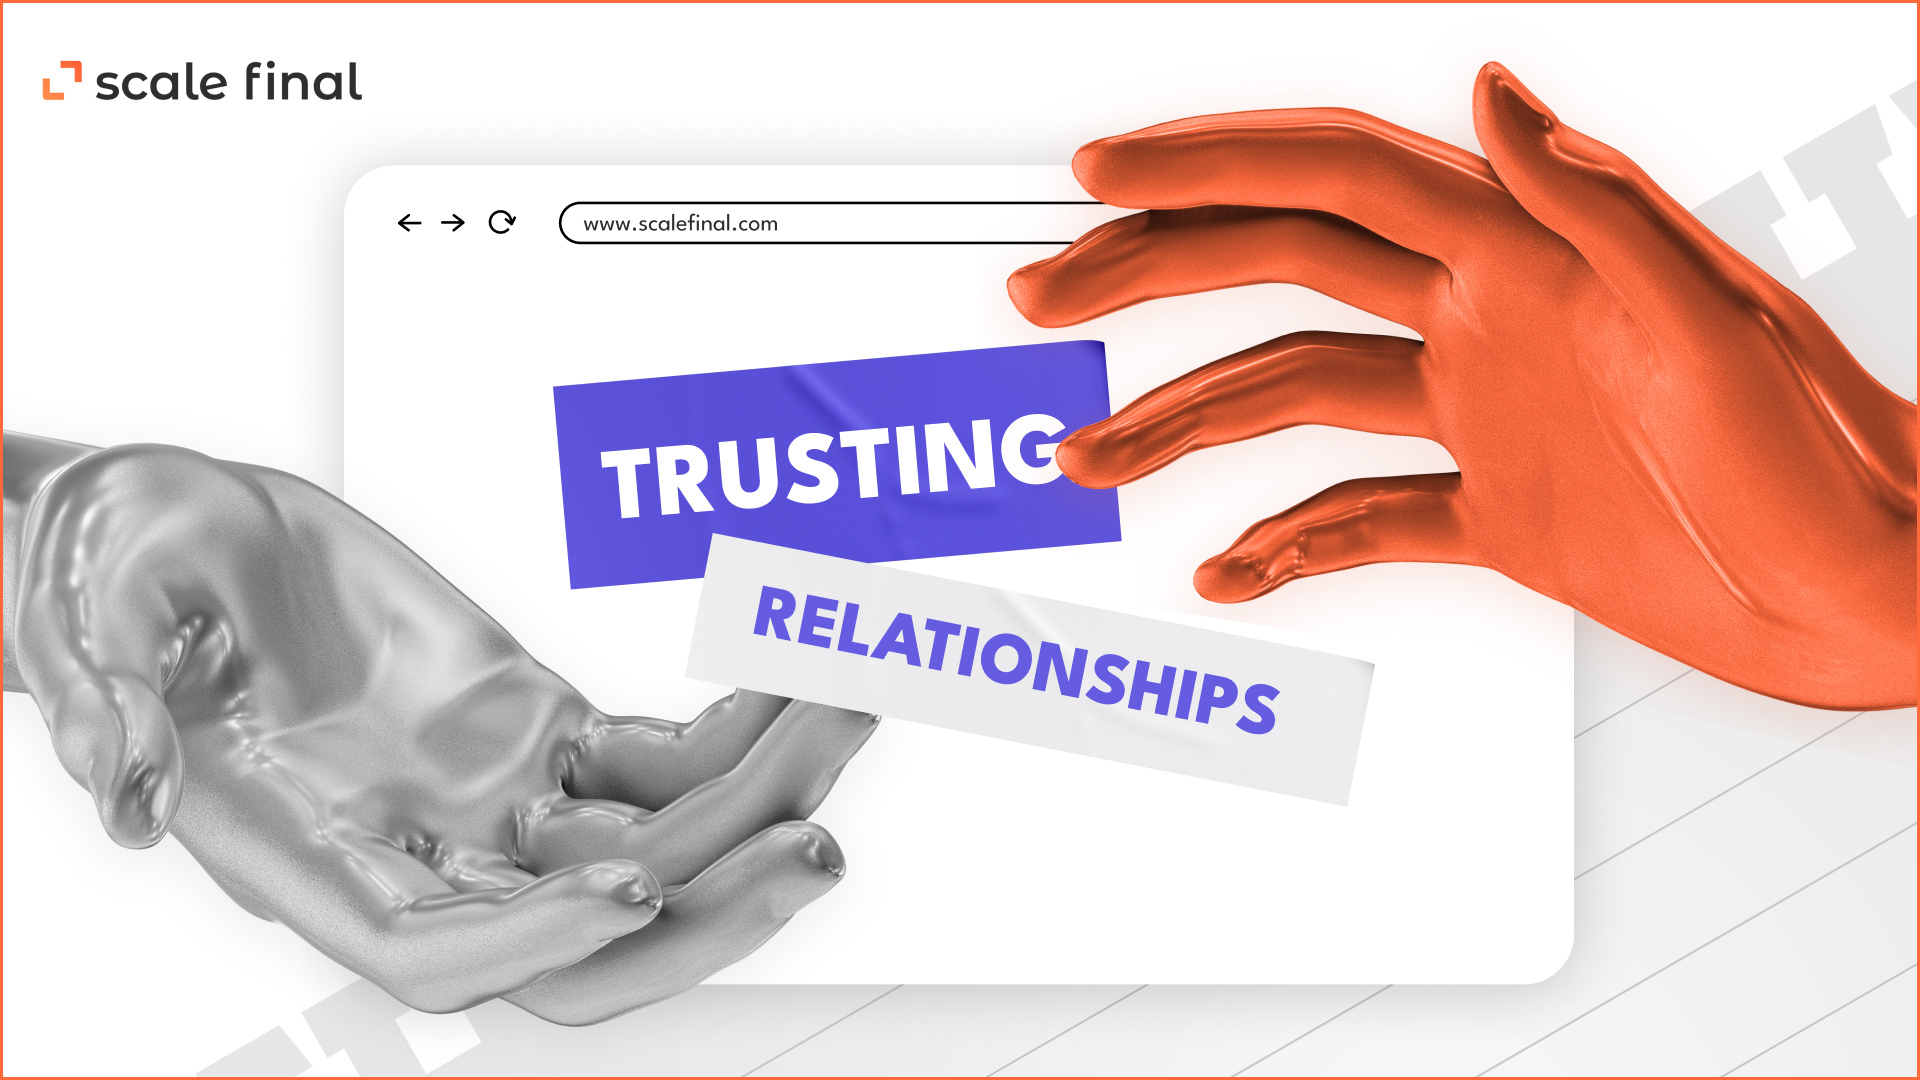 Trusting relationships